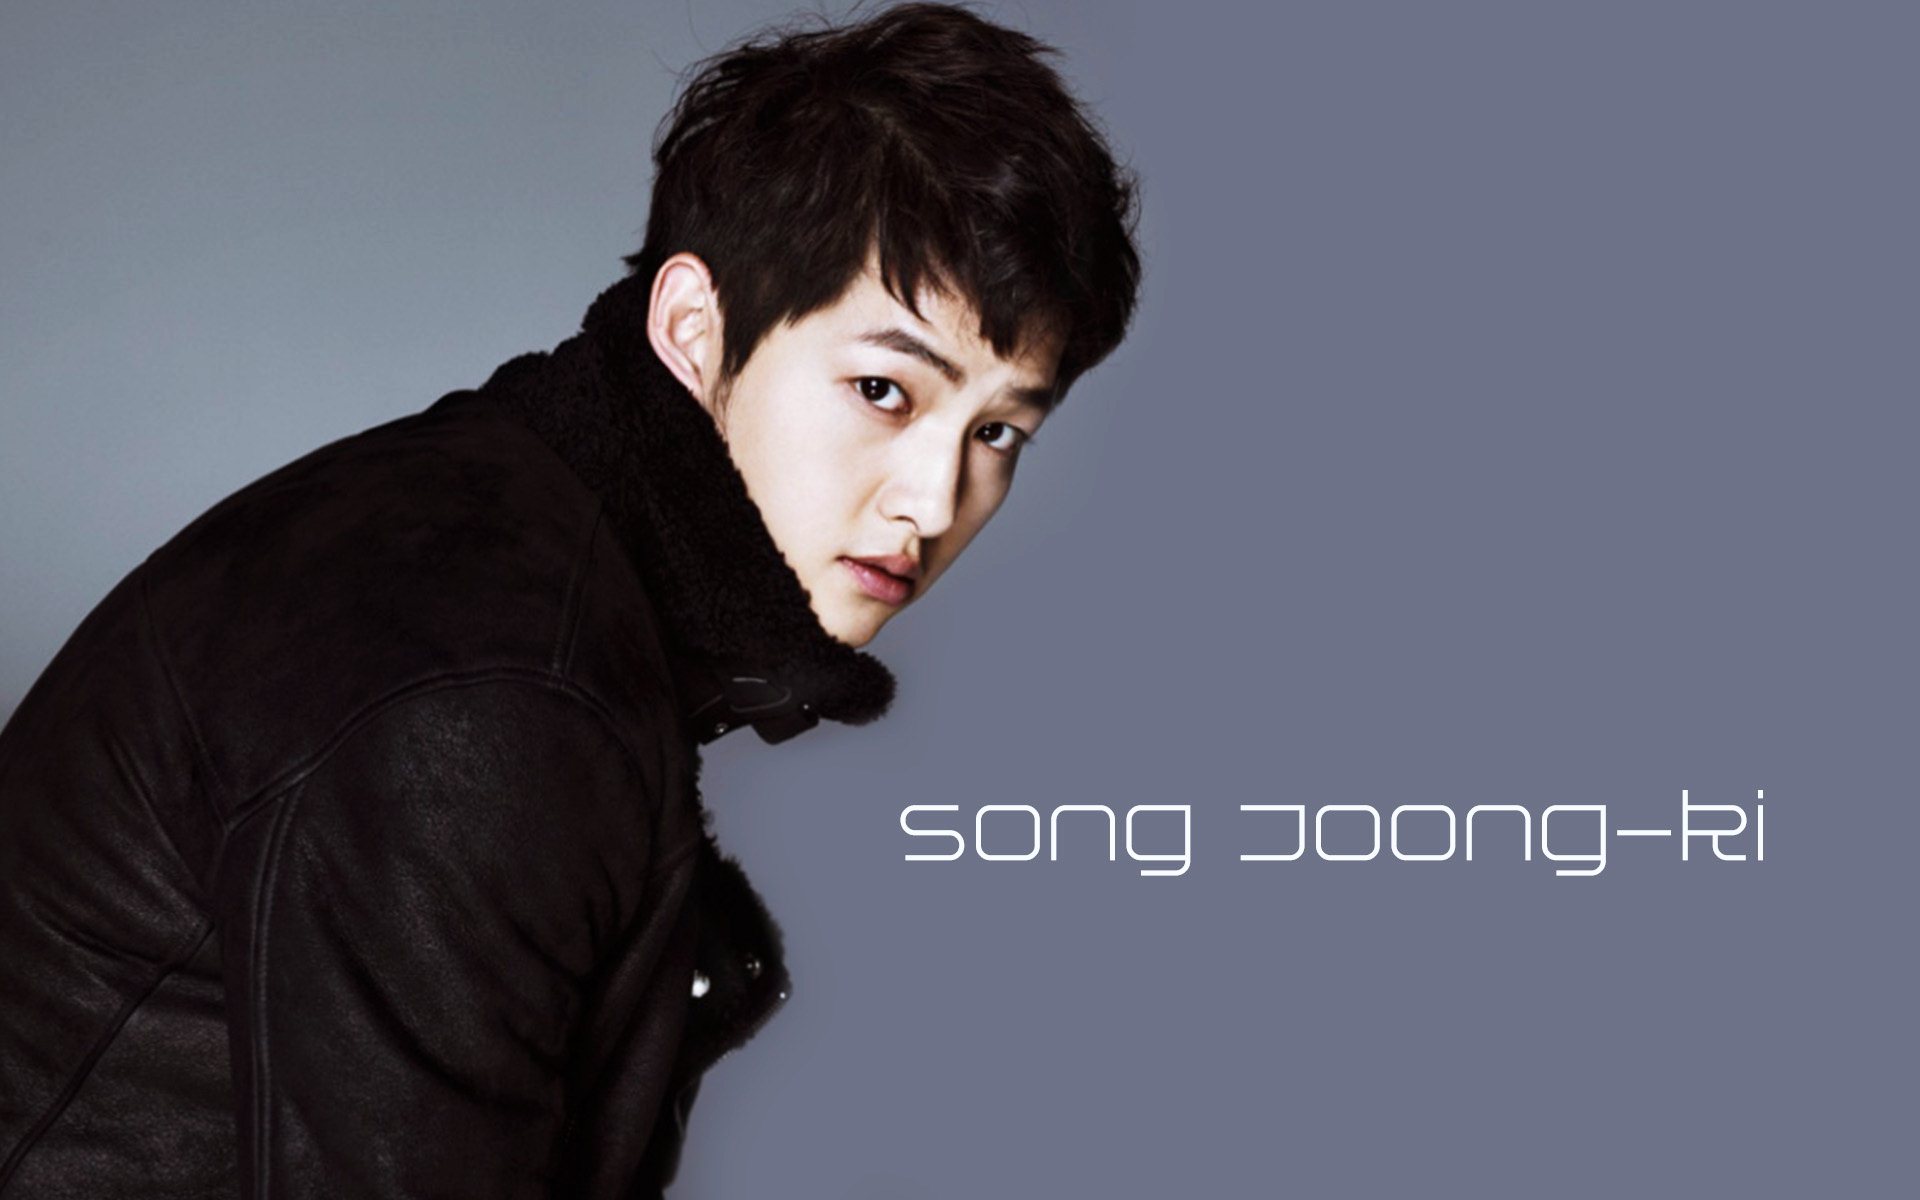 song joong ki wallpaper,forehead,cheek,chin,black hair,photography